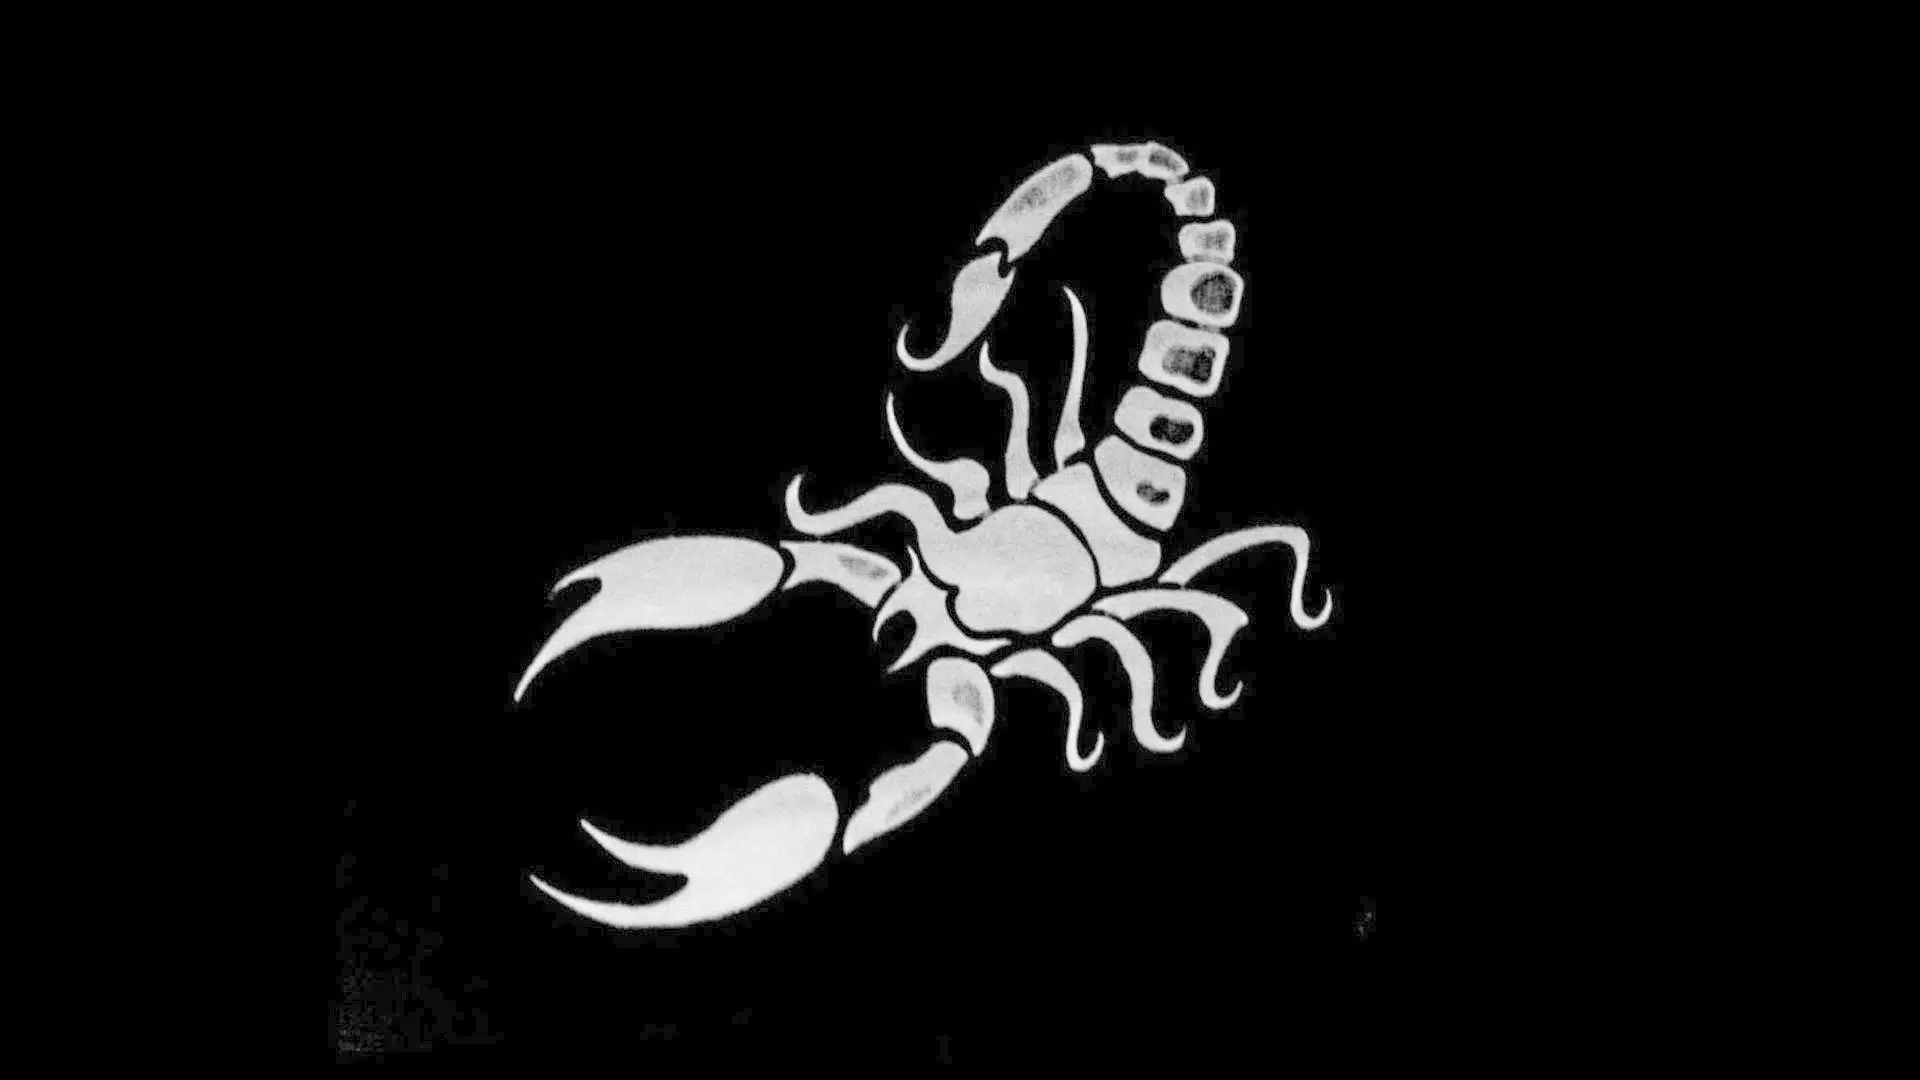 A scorpion is shown in black and white. - Scorpio